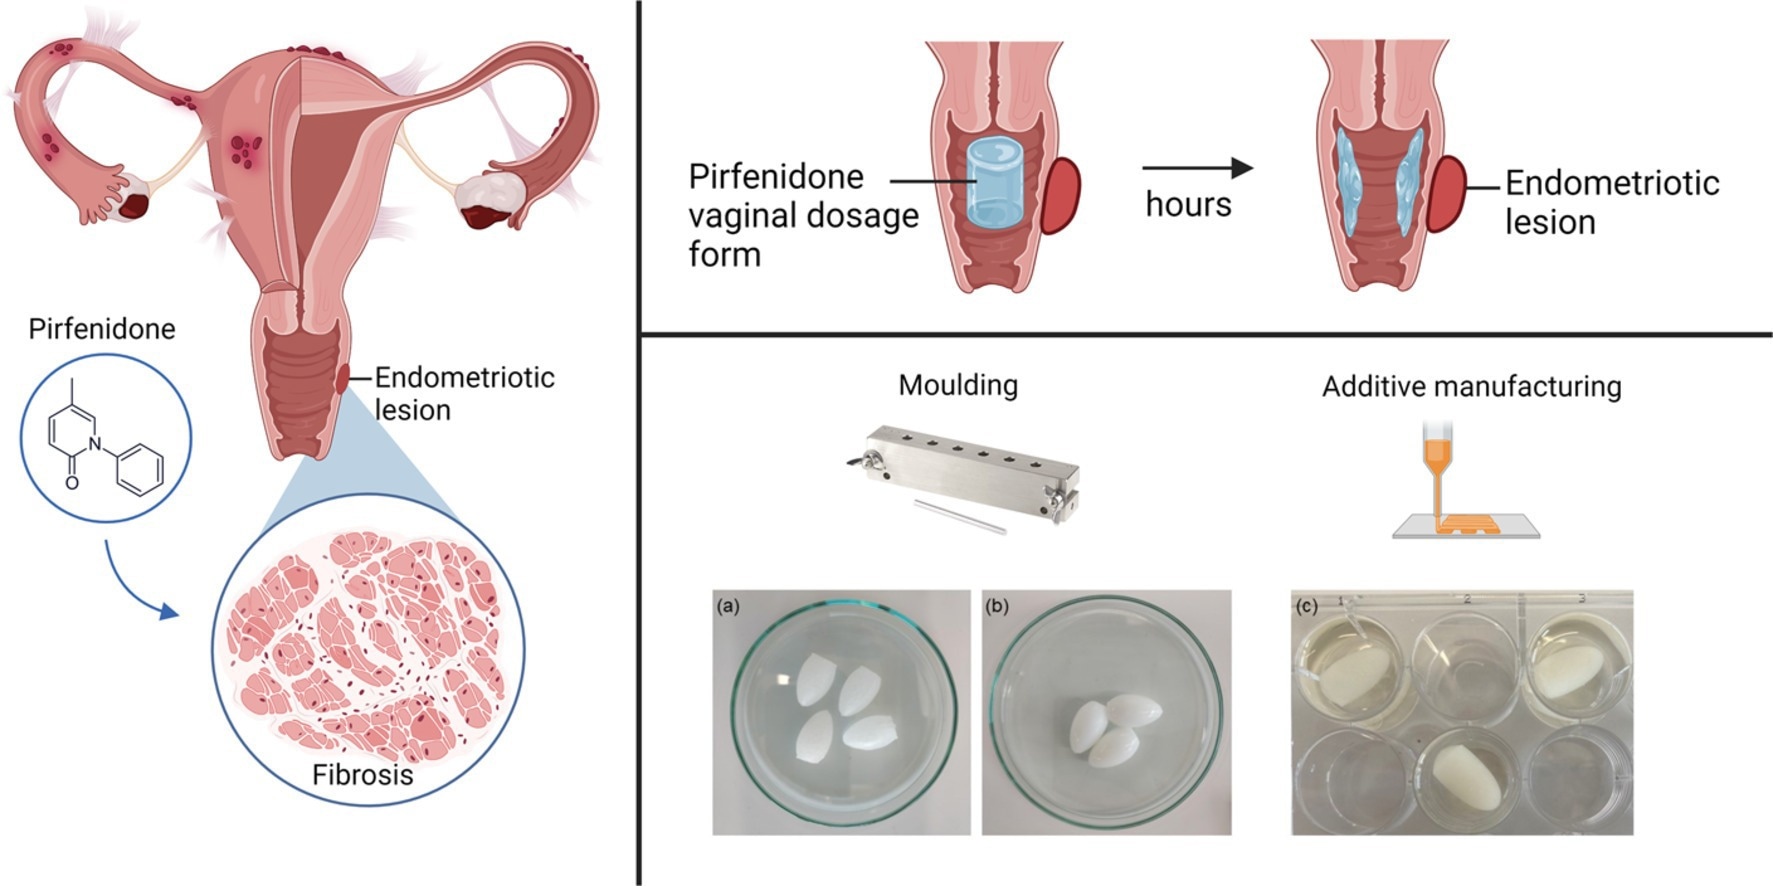 Study: Mucoadhesive 3D printed vaginal ovules to treat endometriosis and fibrotic uterine diseases.